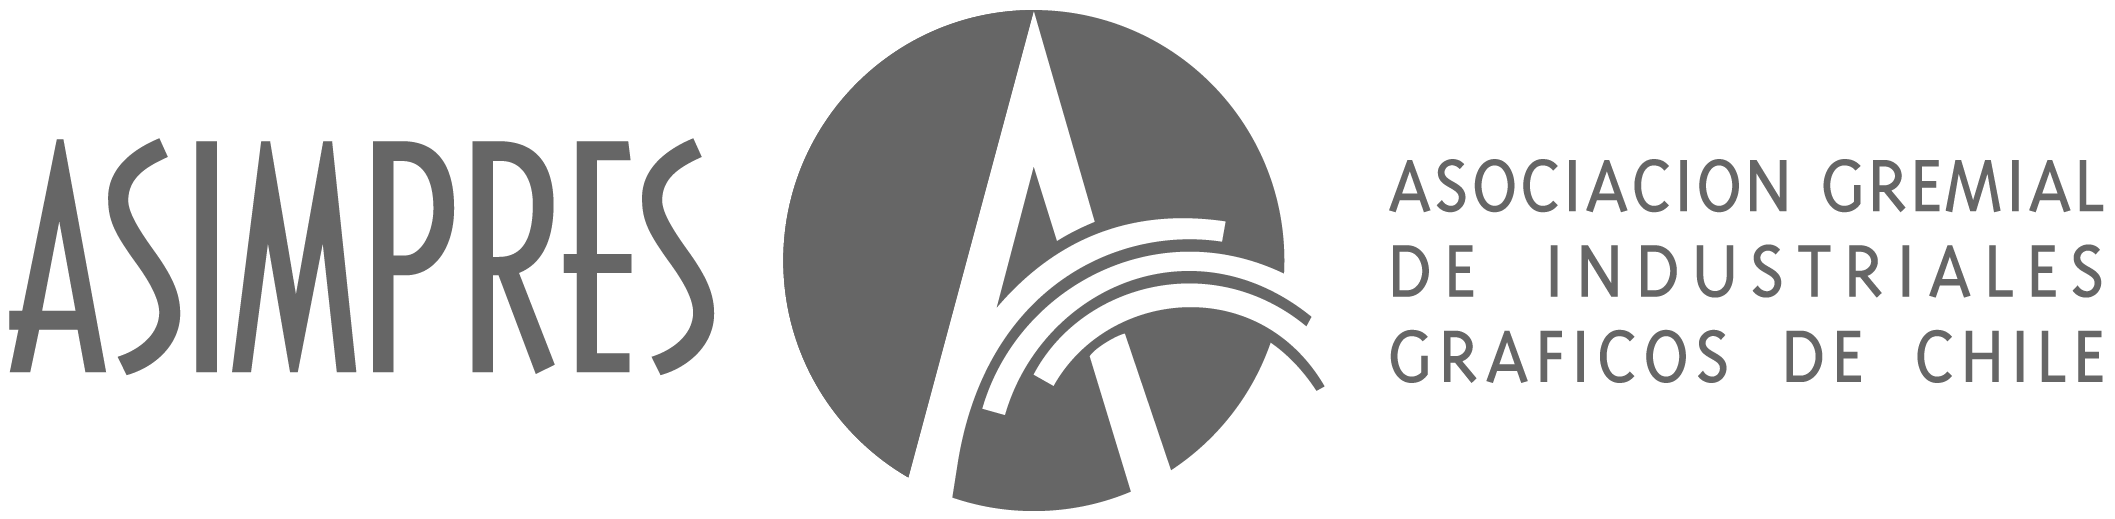 Logo Asimpres